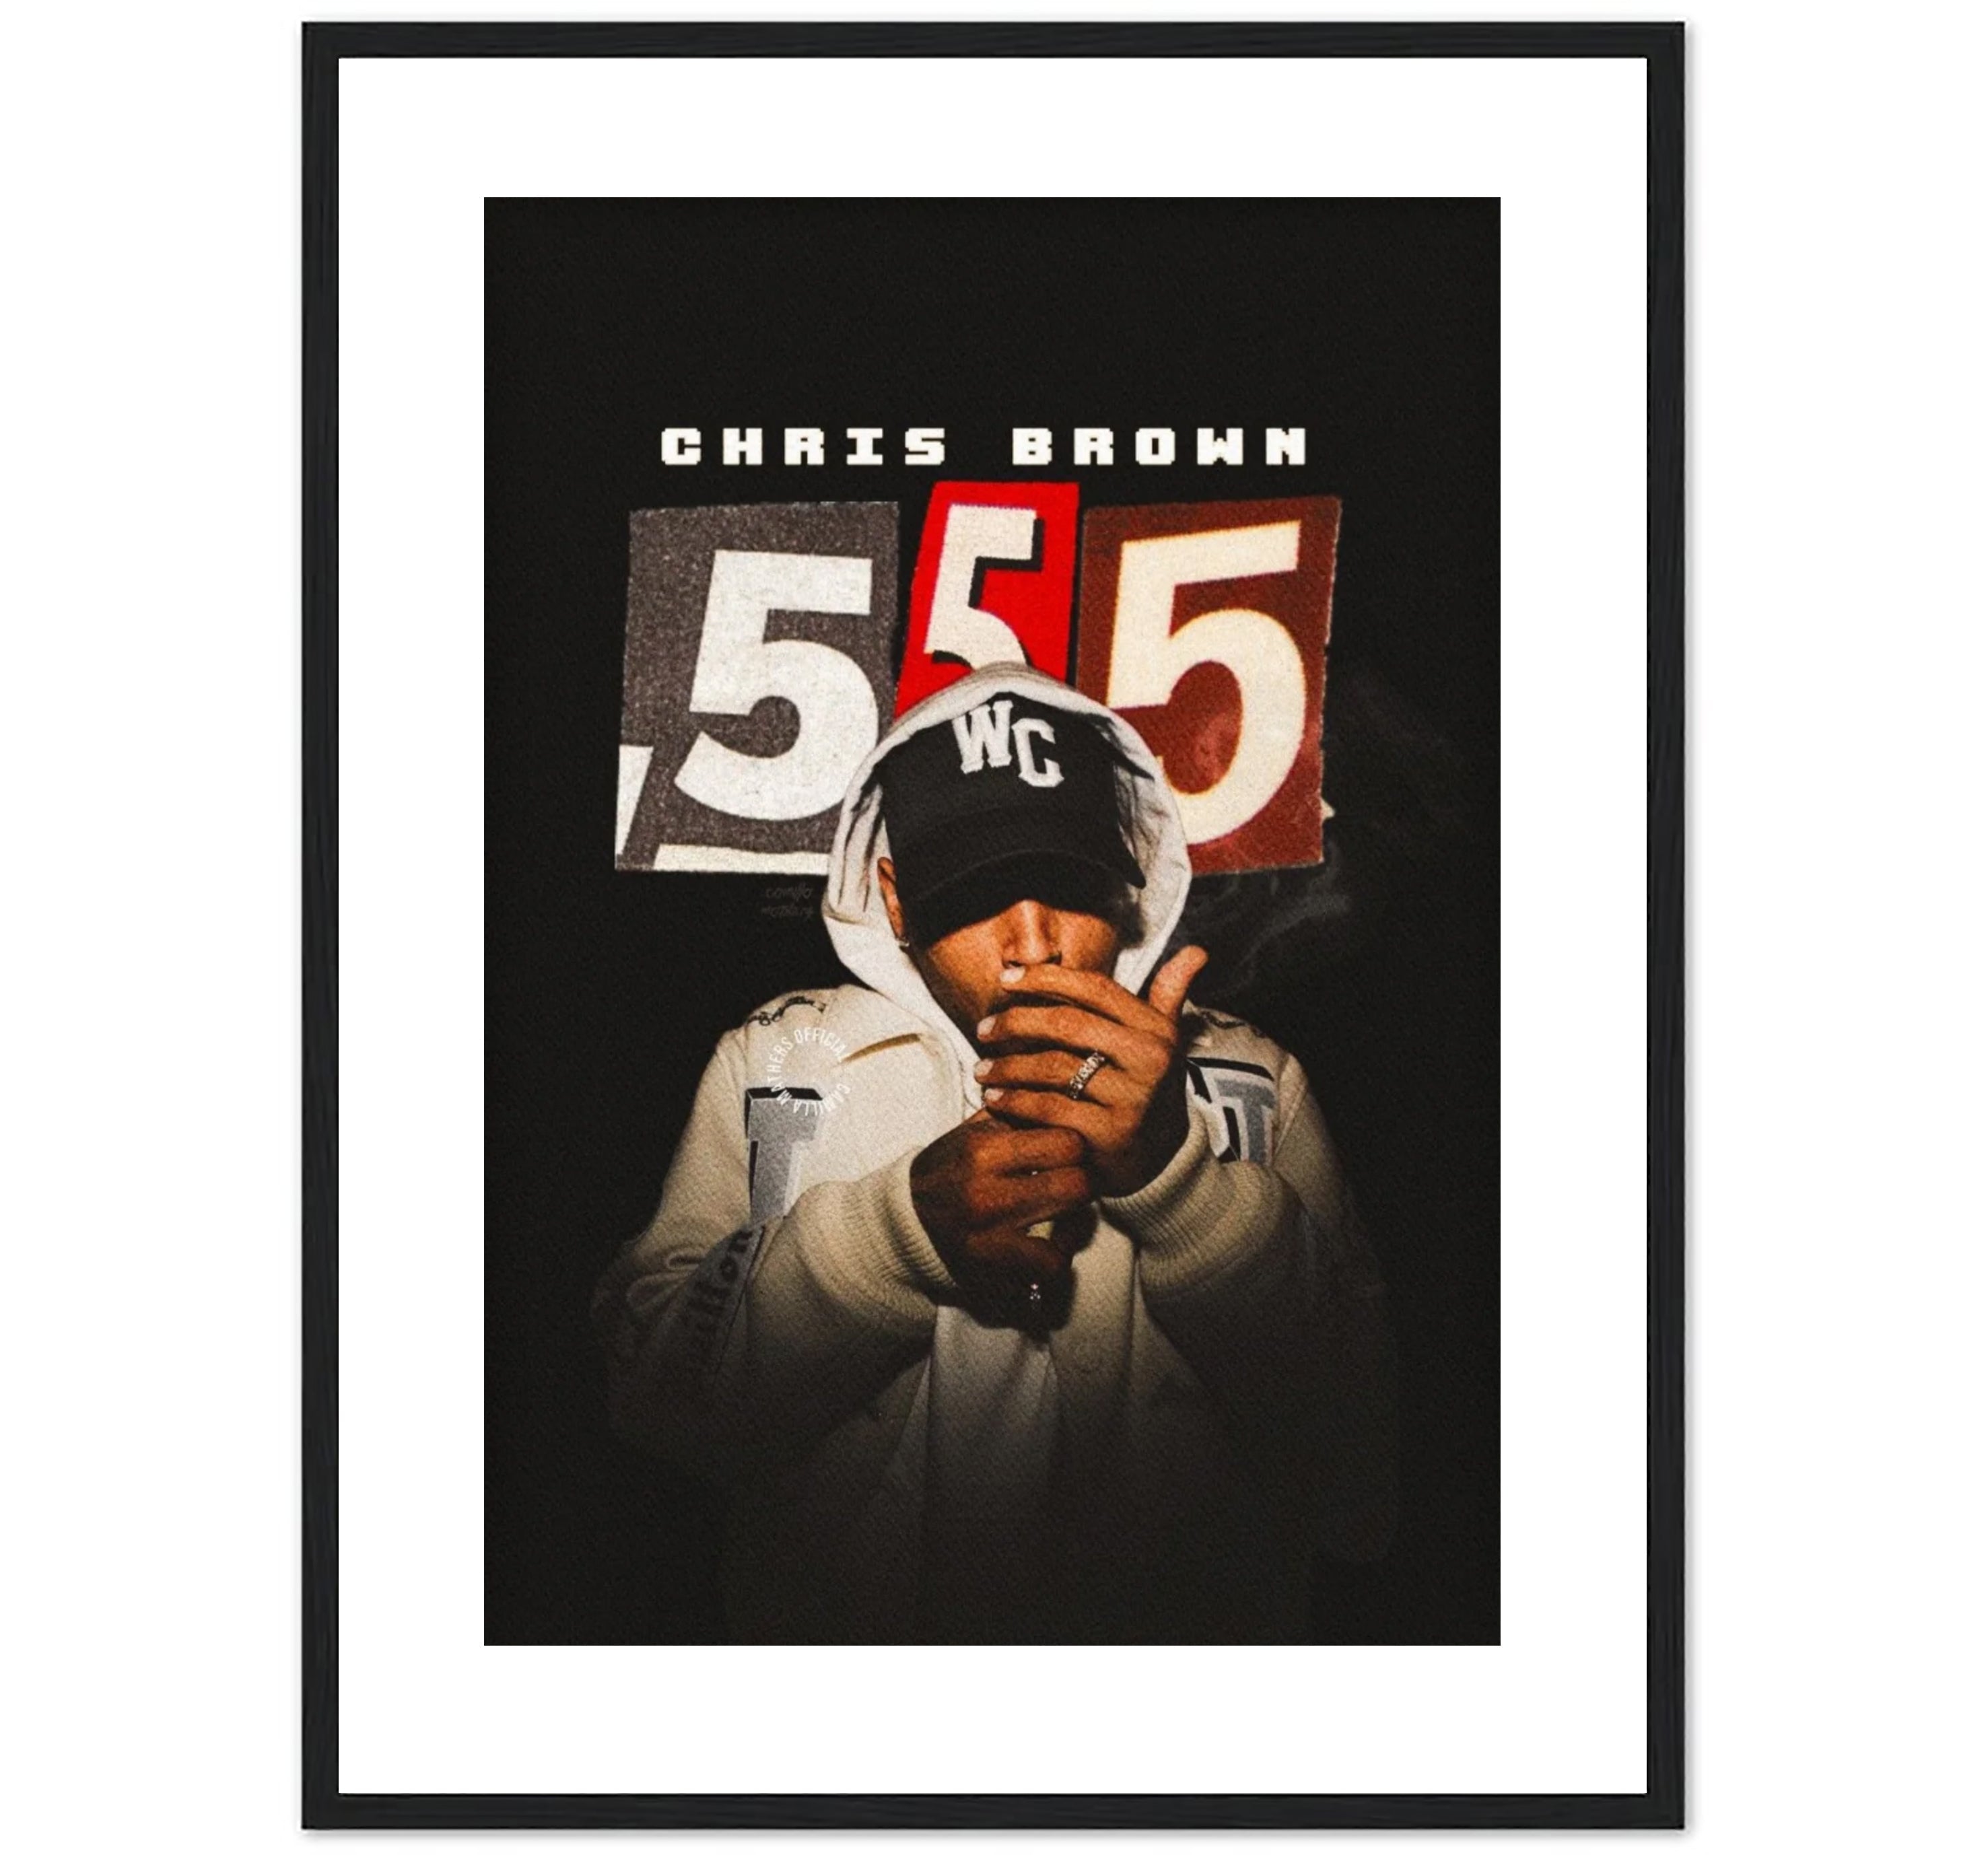 Chris Brown 555